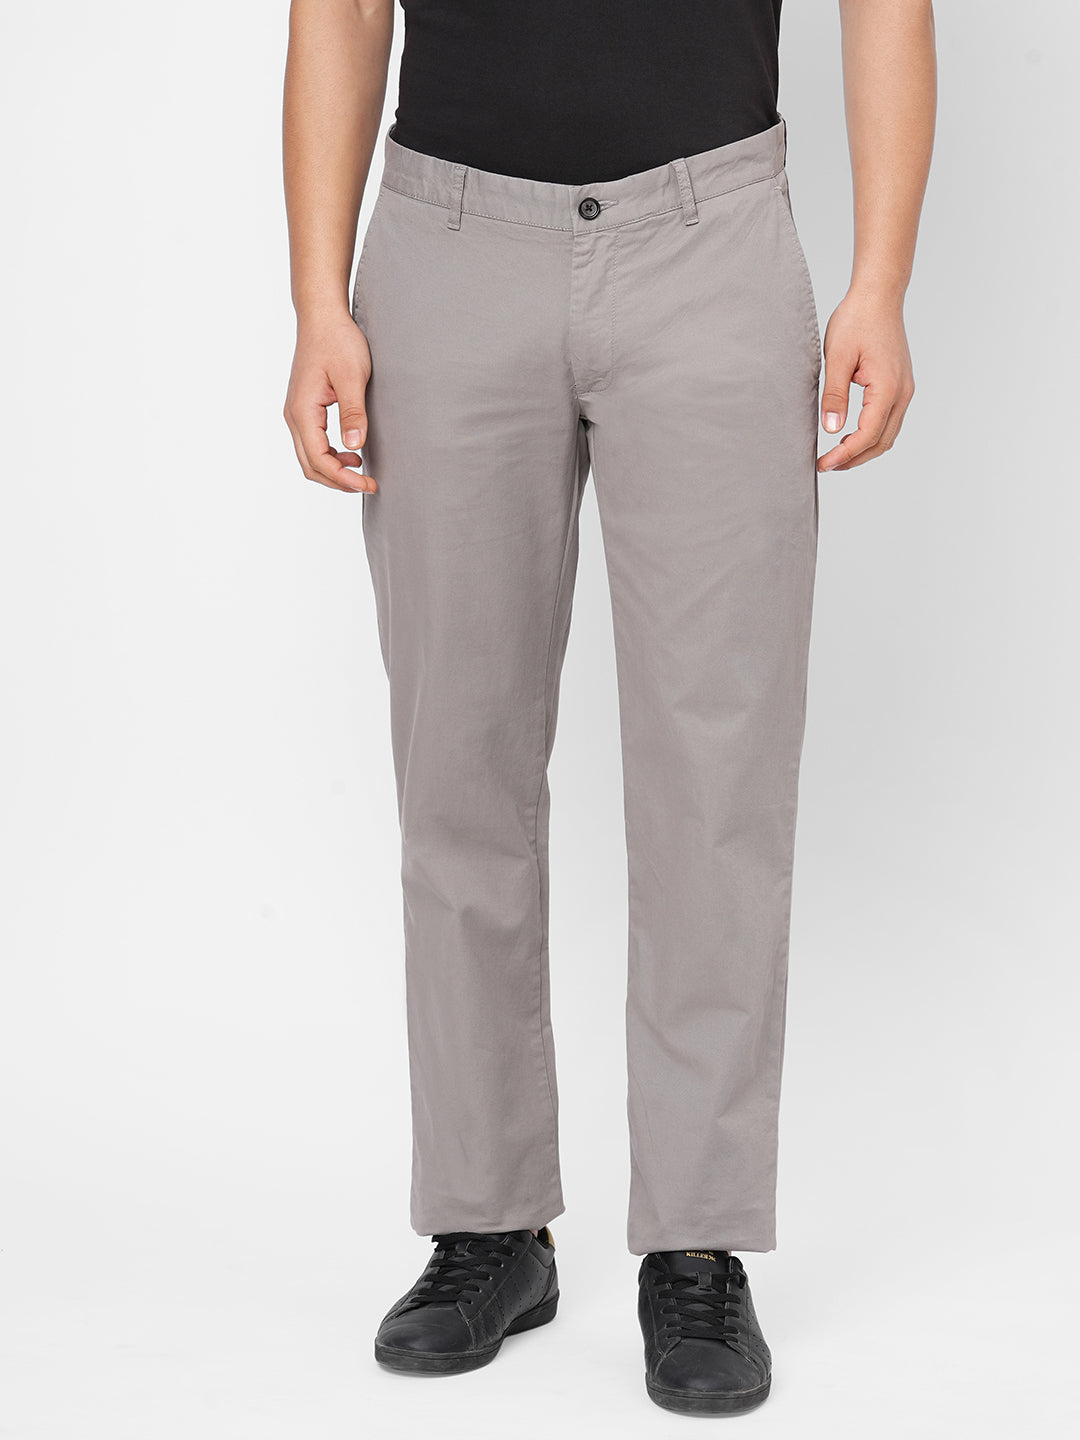 Men's Grey Cotton Lycra Regular Fit Pant